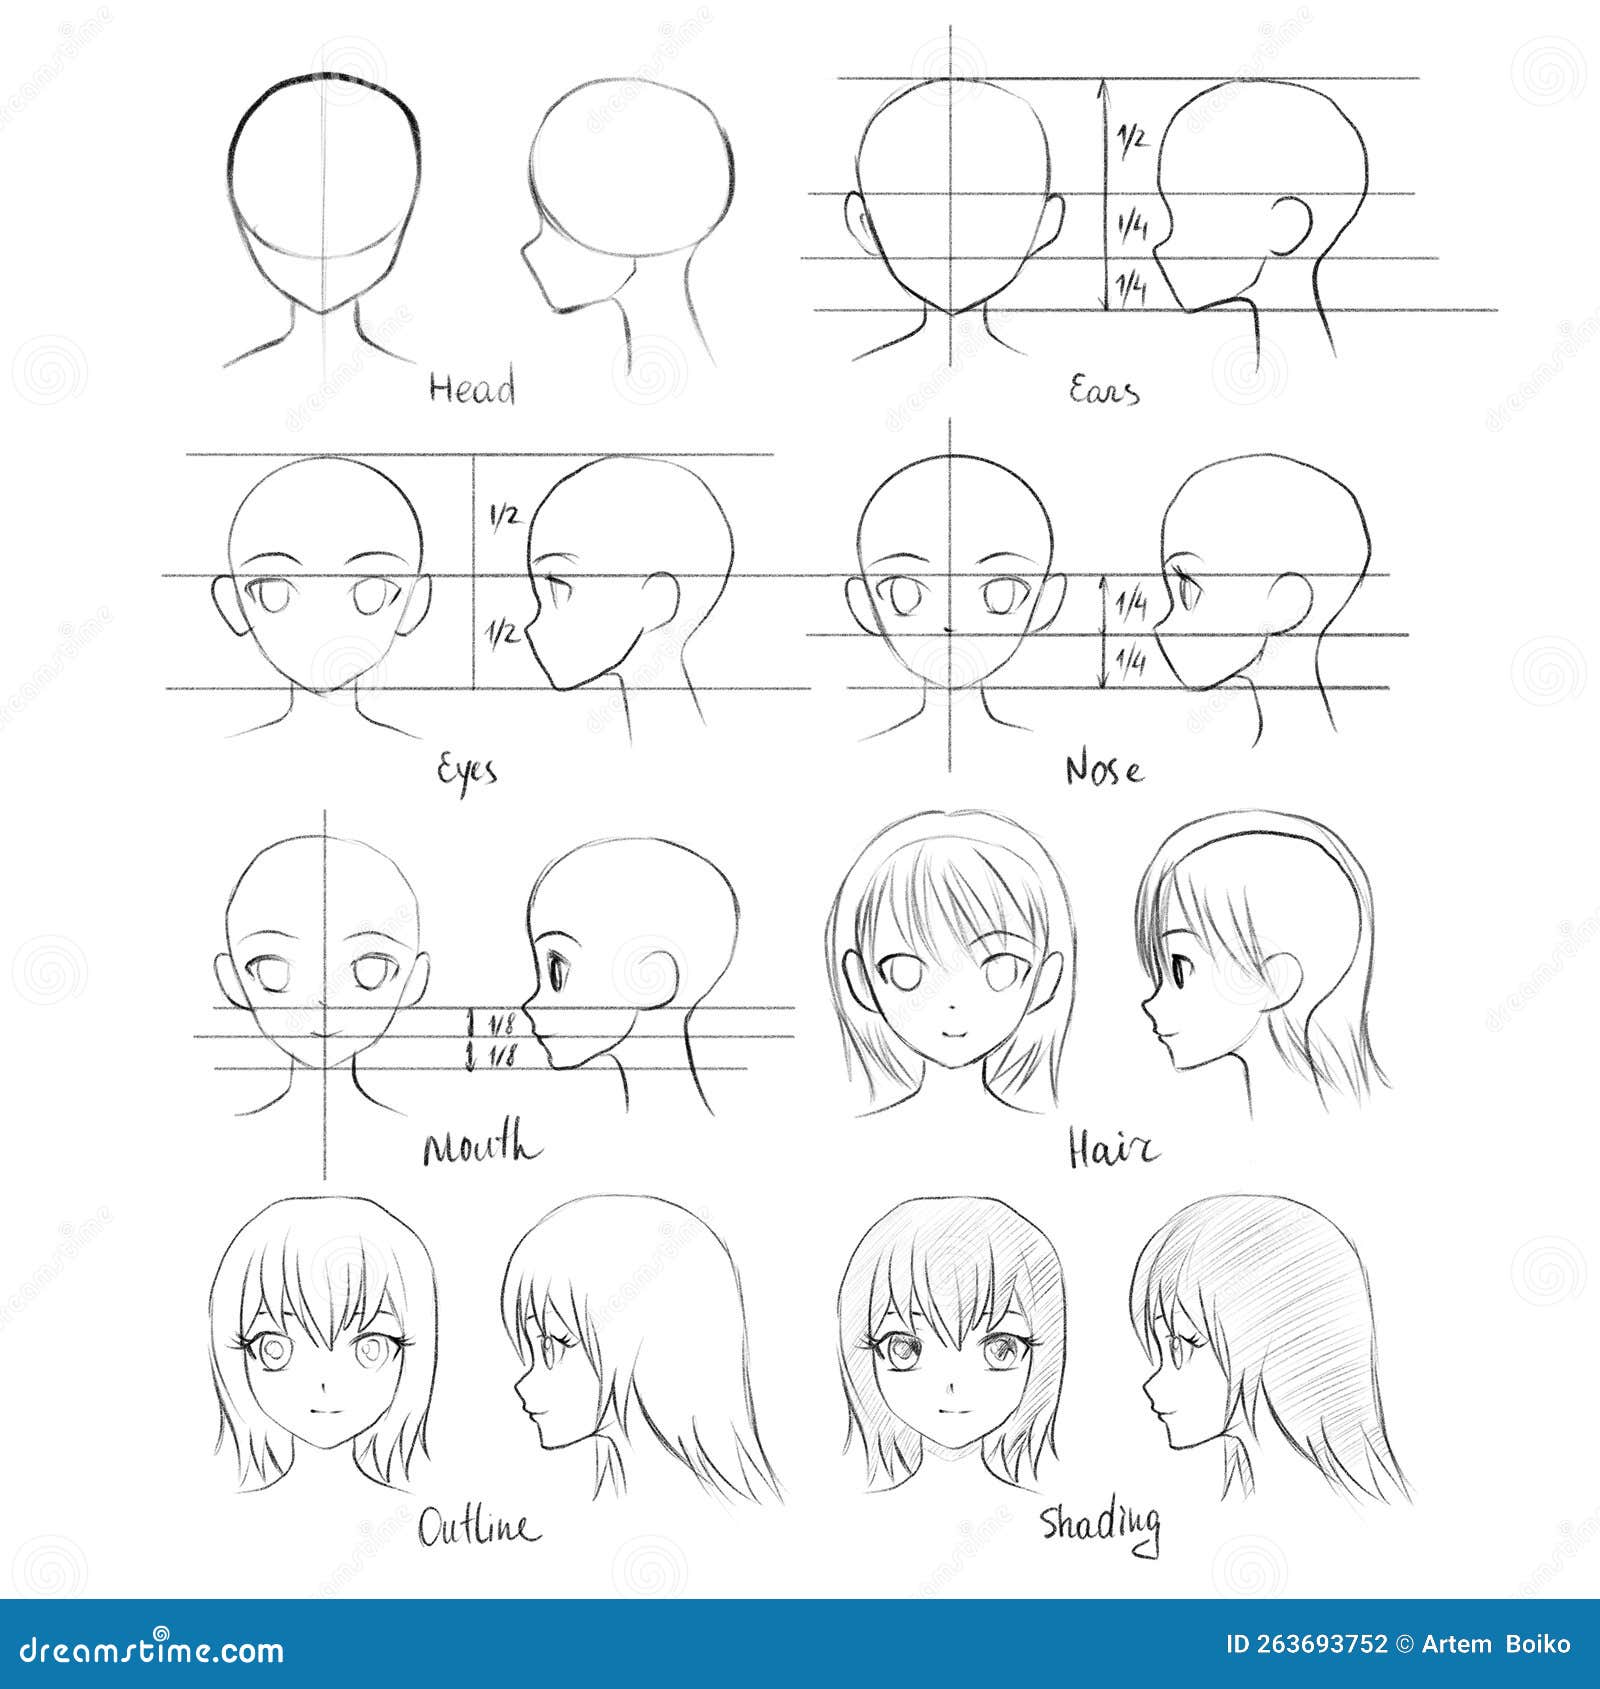 How to draw: Simple Anime/Manga eye FEMALE 